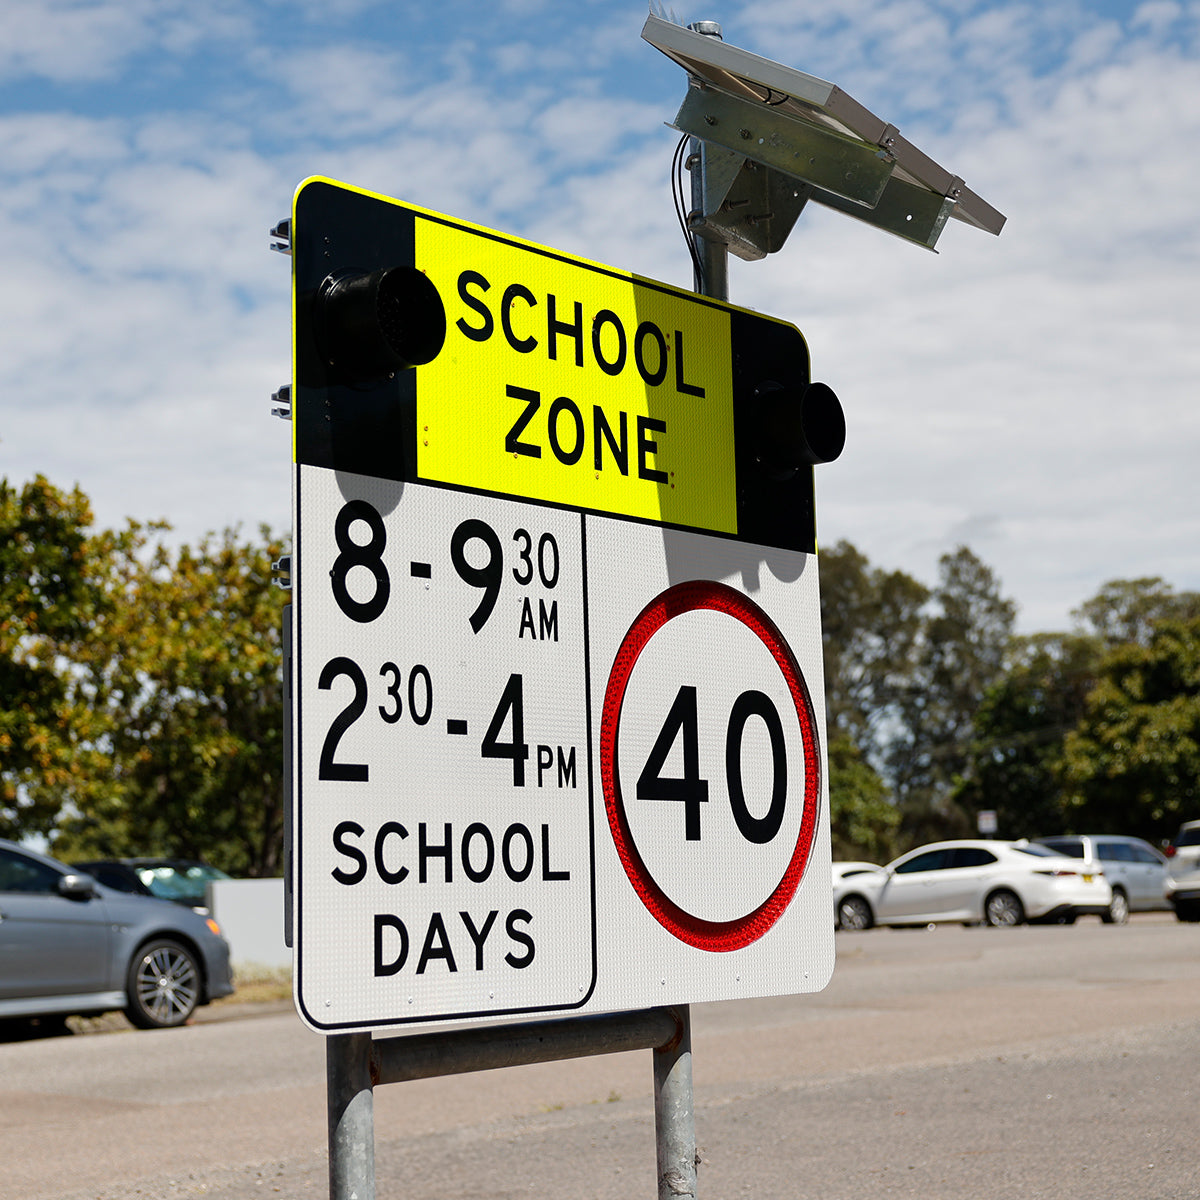 NSW LED School Zone Alert Signs